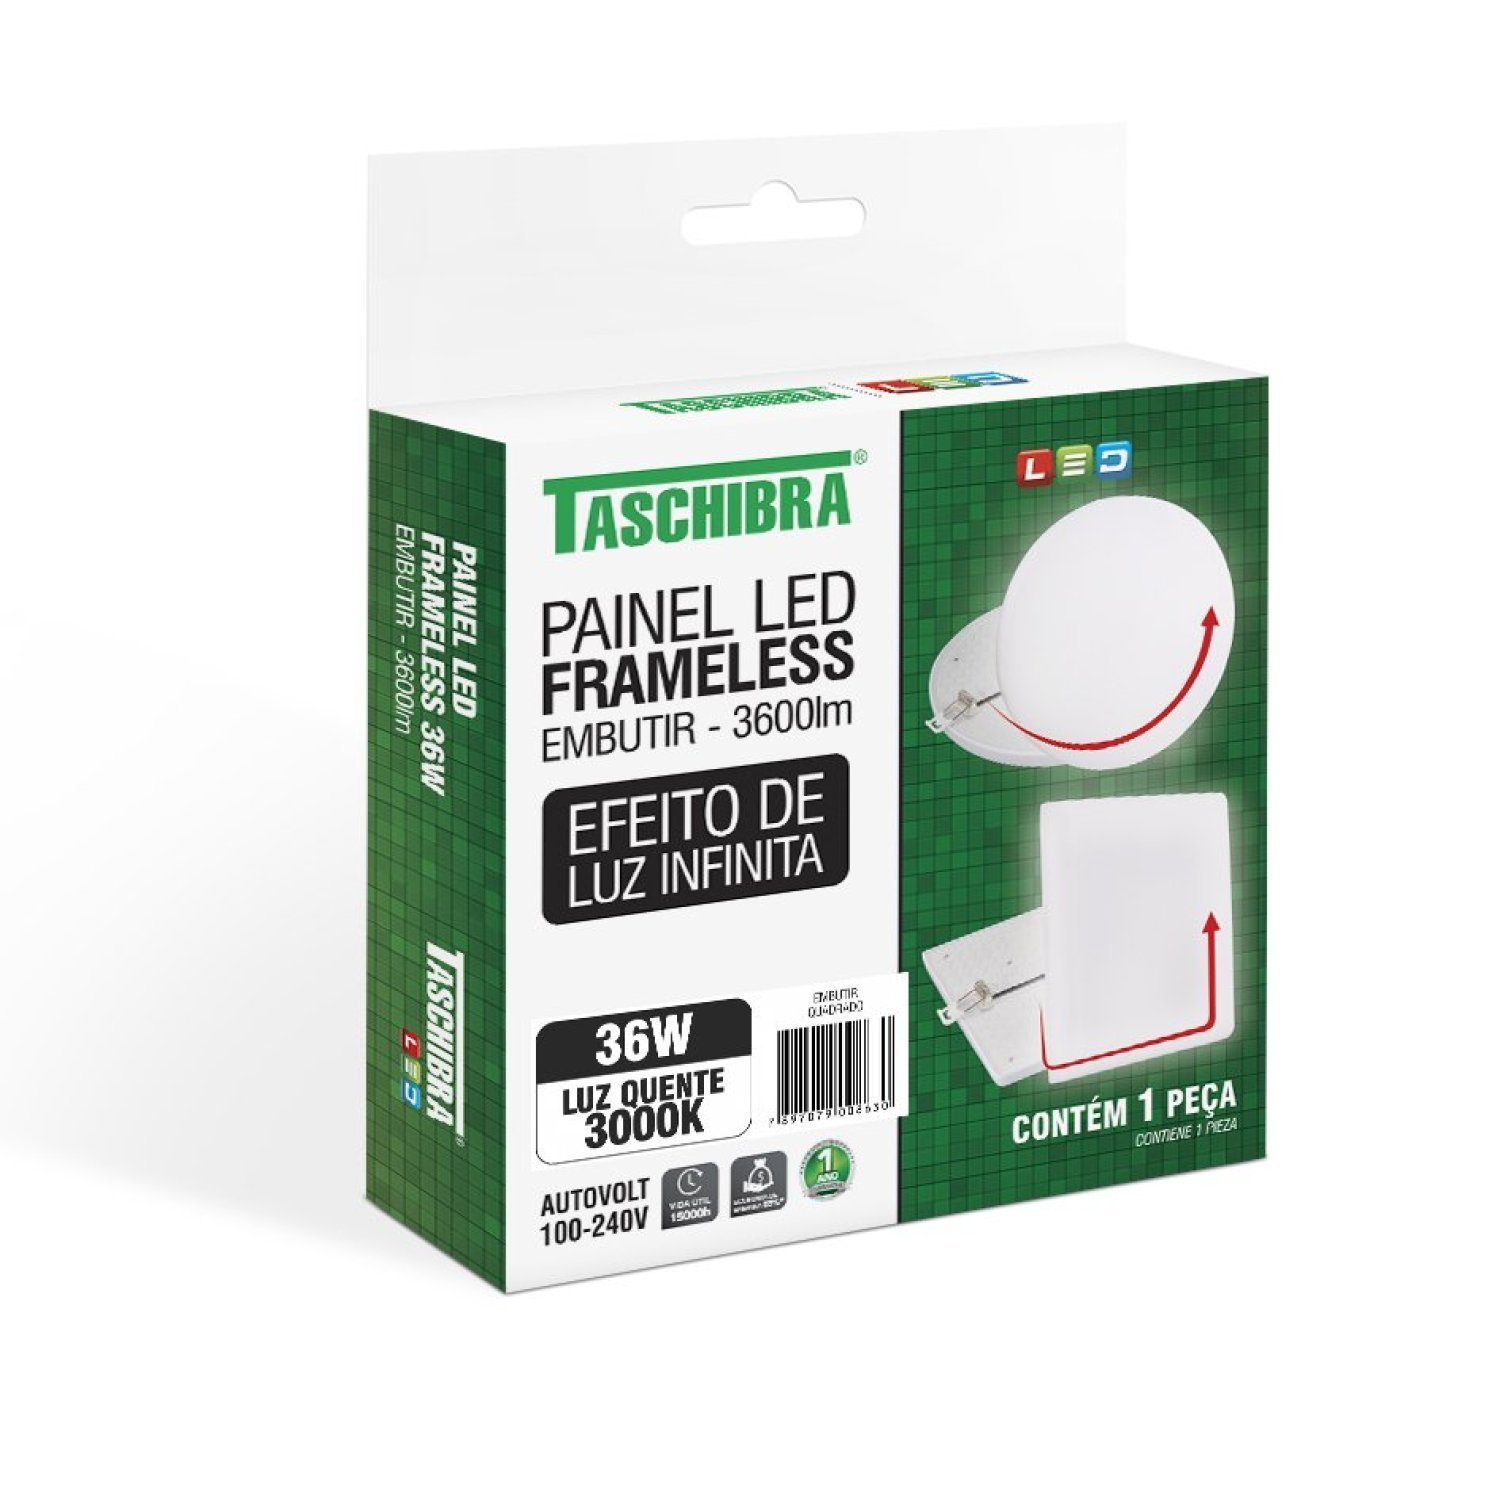 Painel LED Frameless Embutir 36W Quadrado 3000K Taschibra - 4